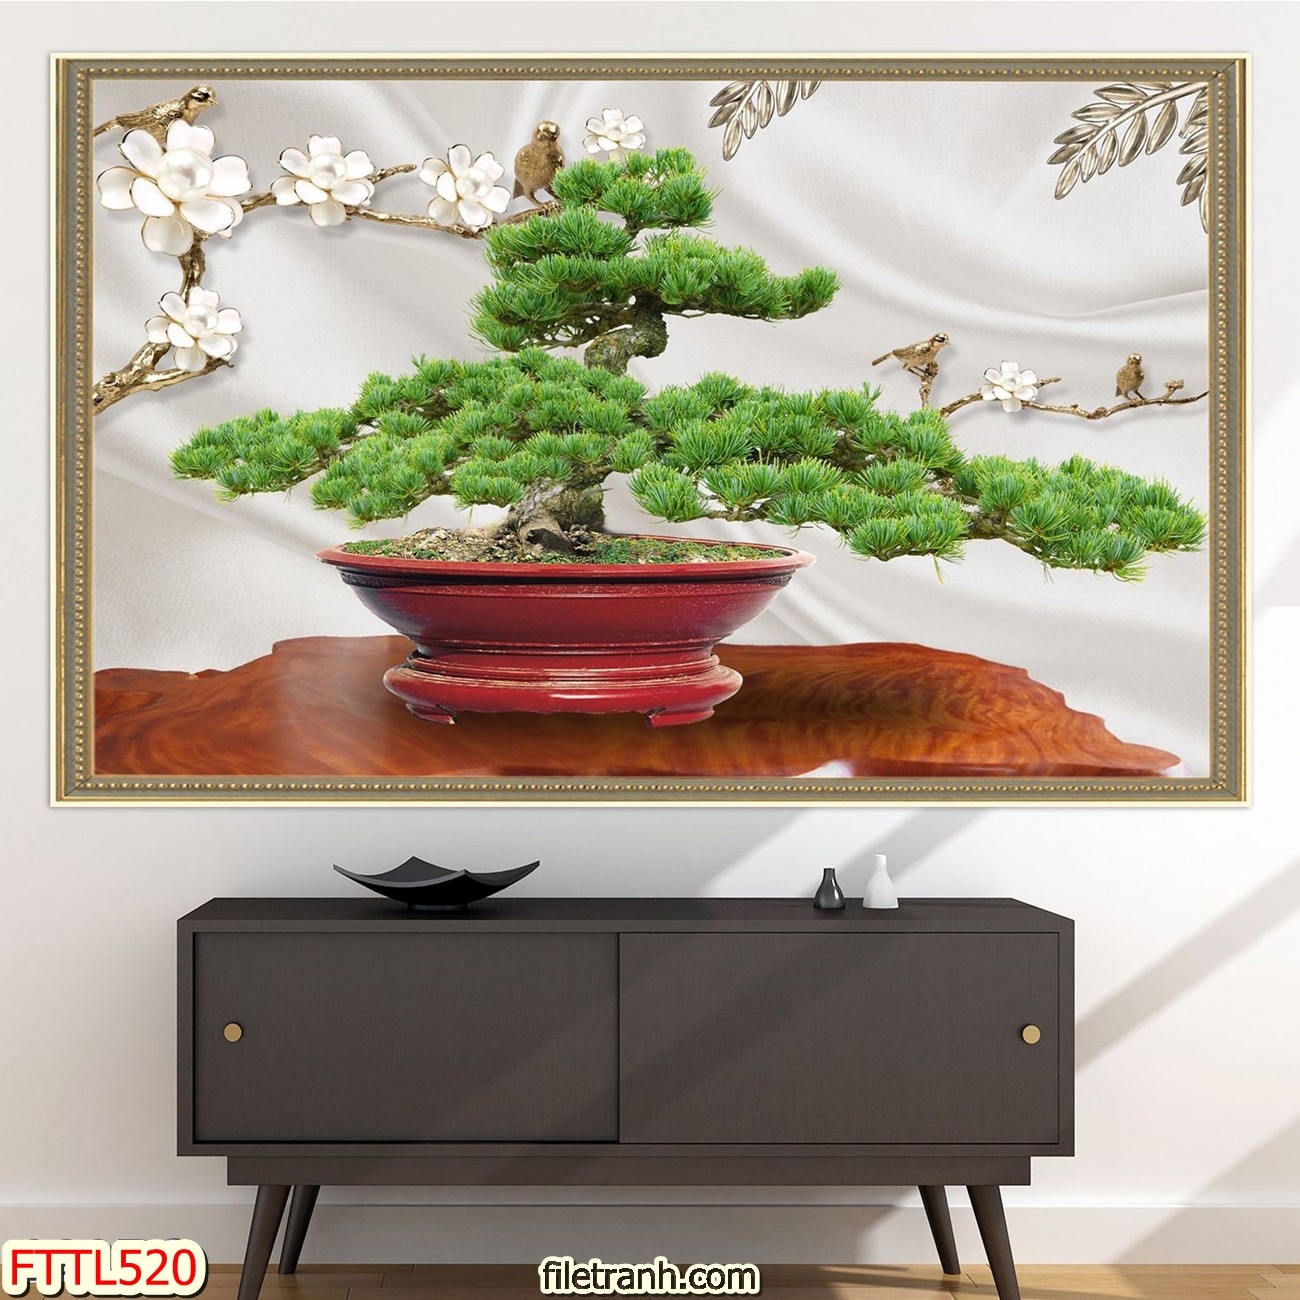 https://filetranh.com/file-tranh-chau-mai-bonsai/file-tranh-chau-mai-bonsai-fttl520.html